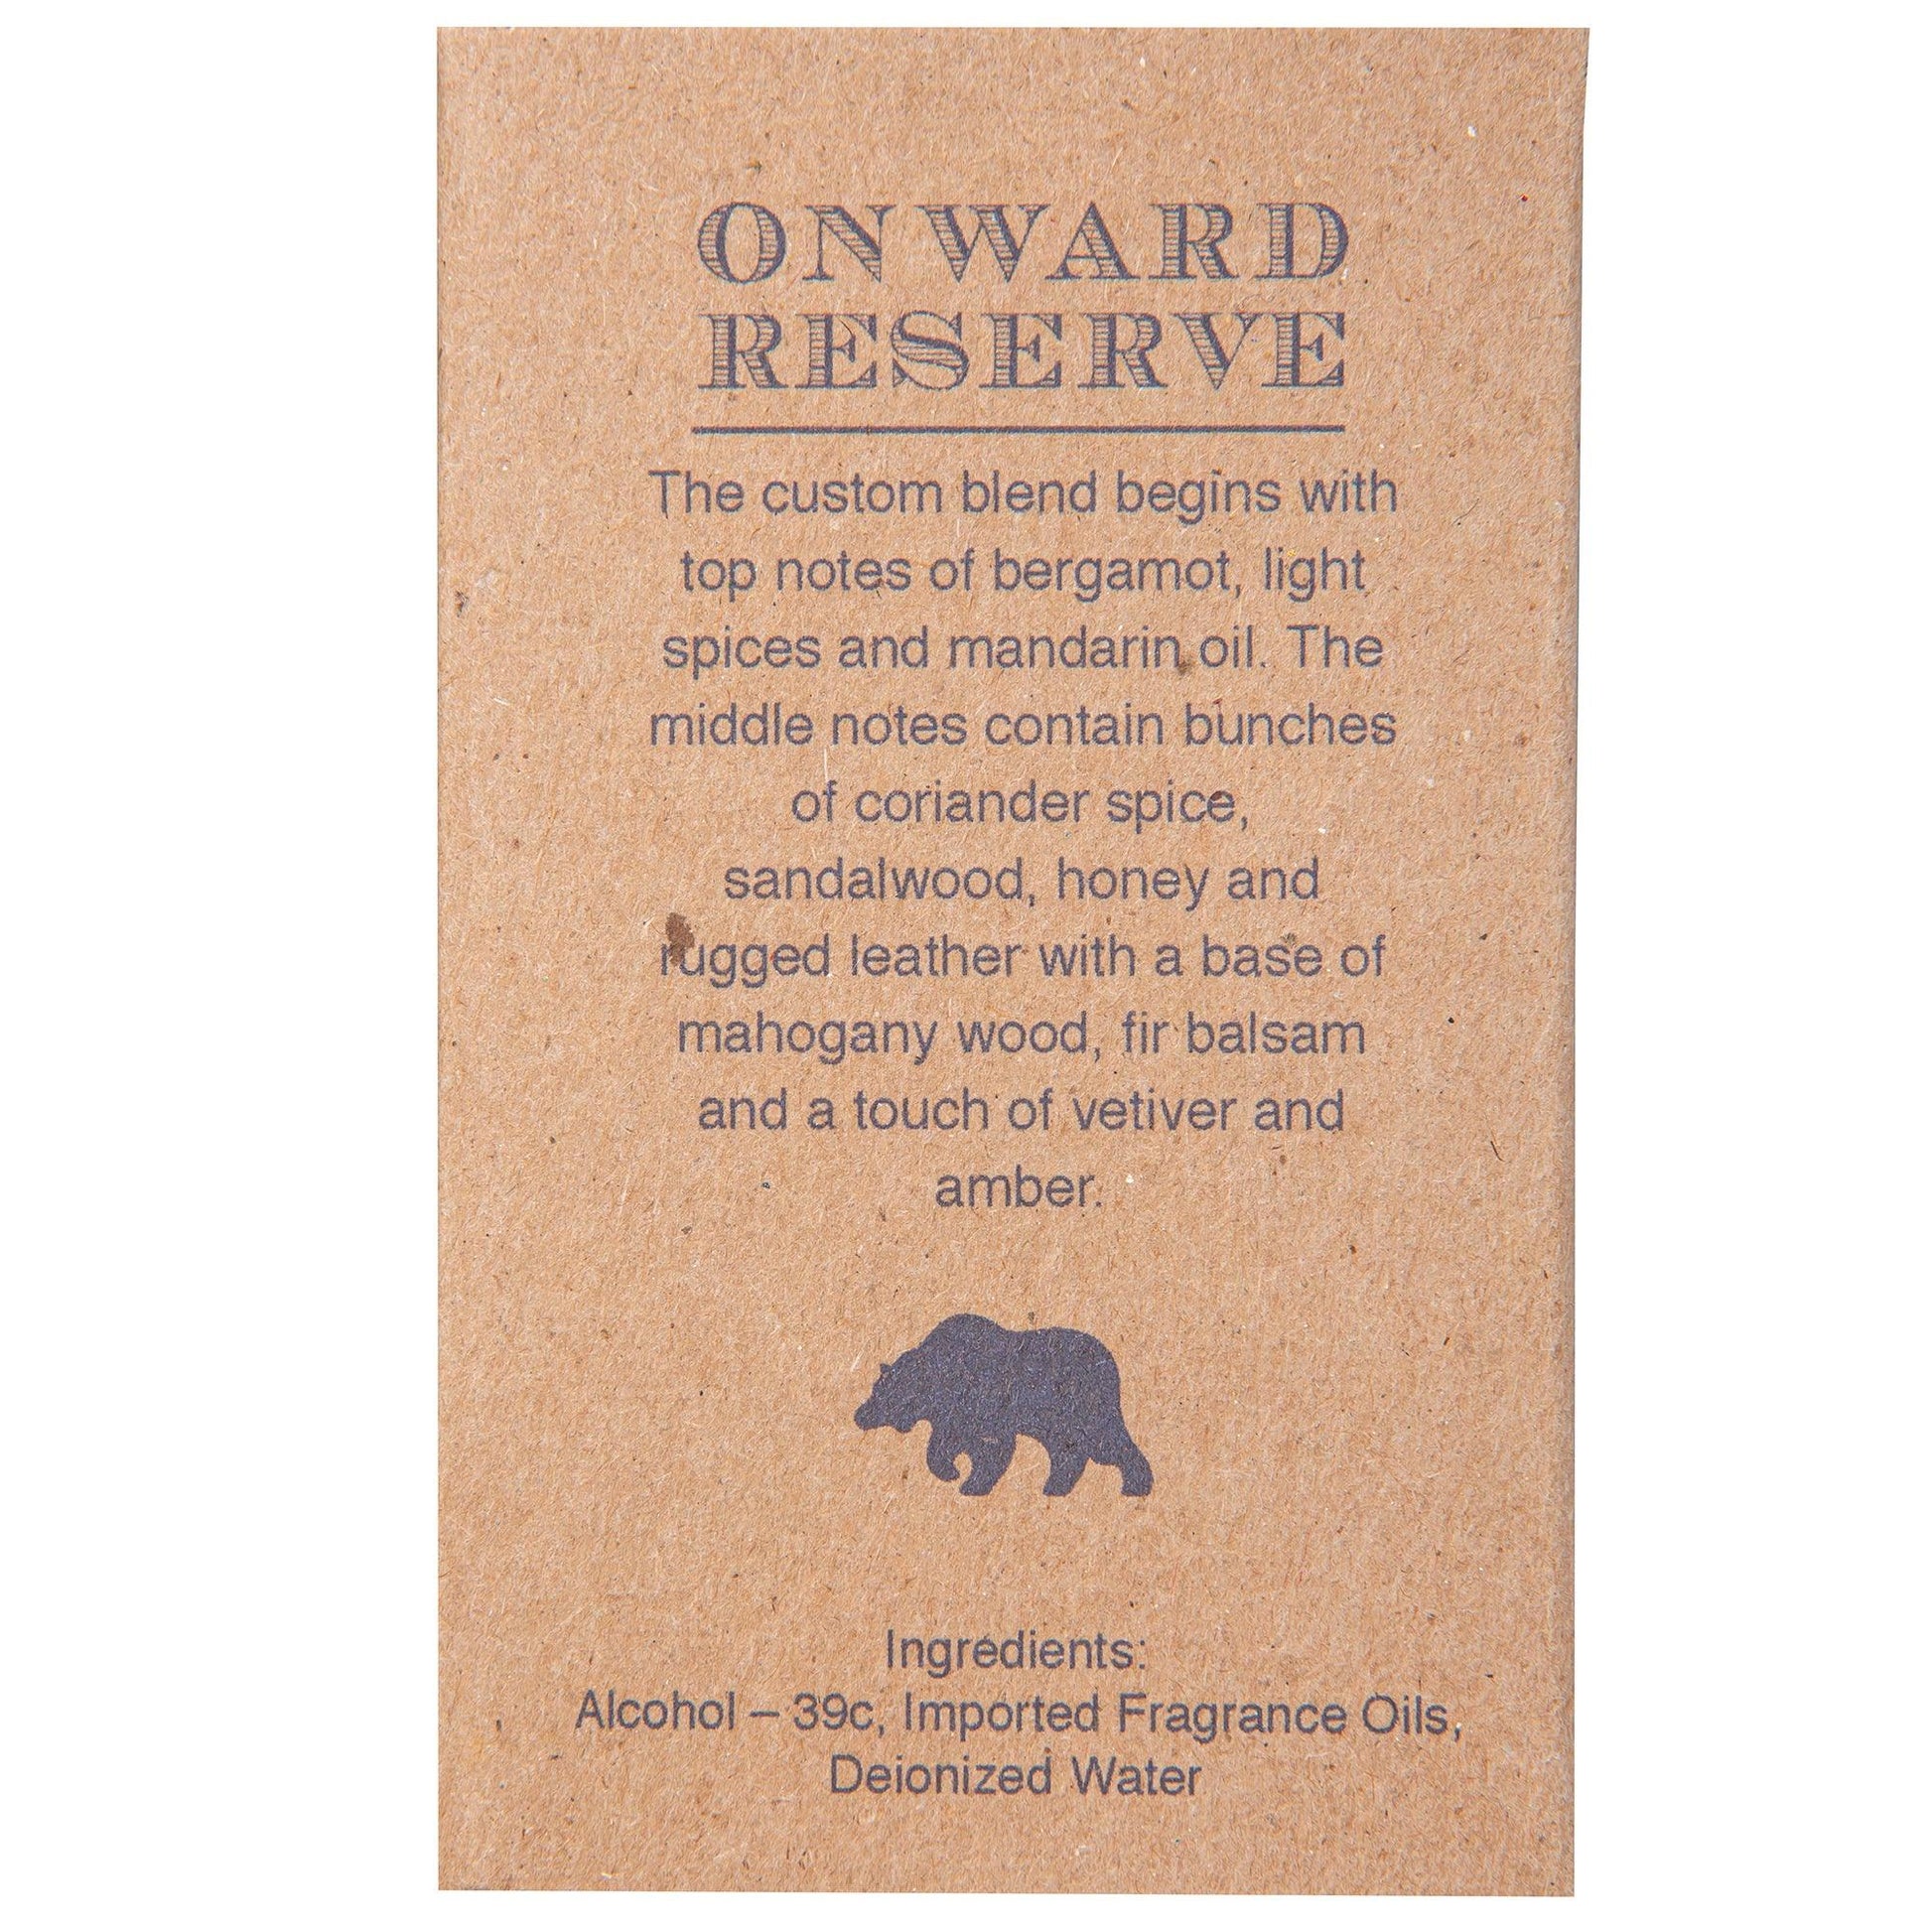 Onward Reserve (@onwardreserve) • Instagram photos and videos